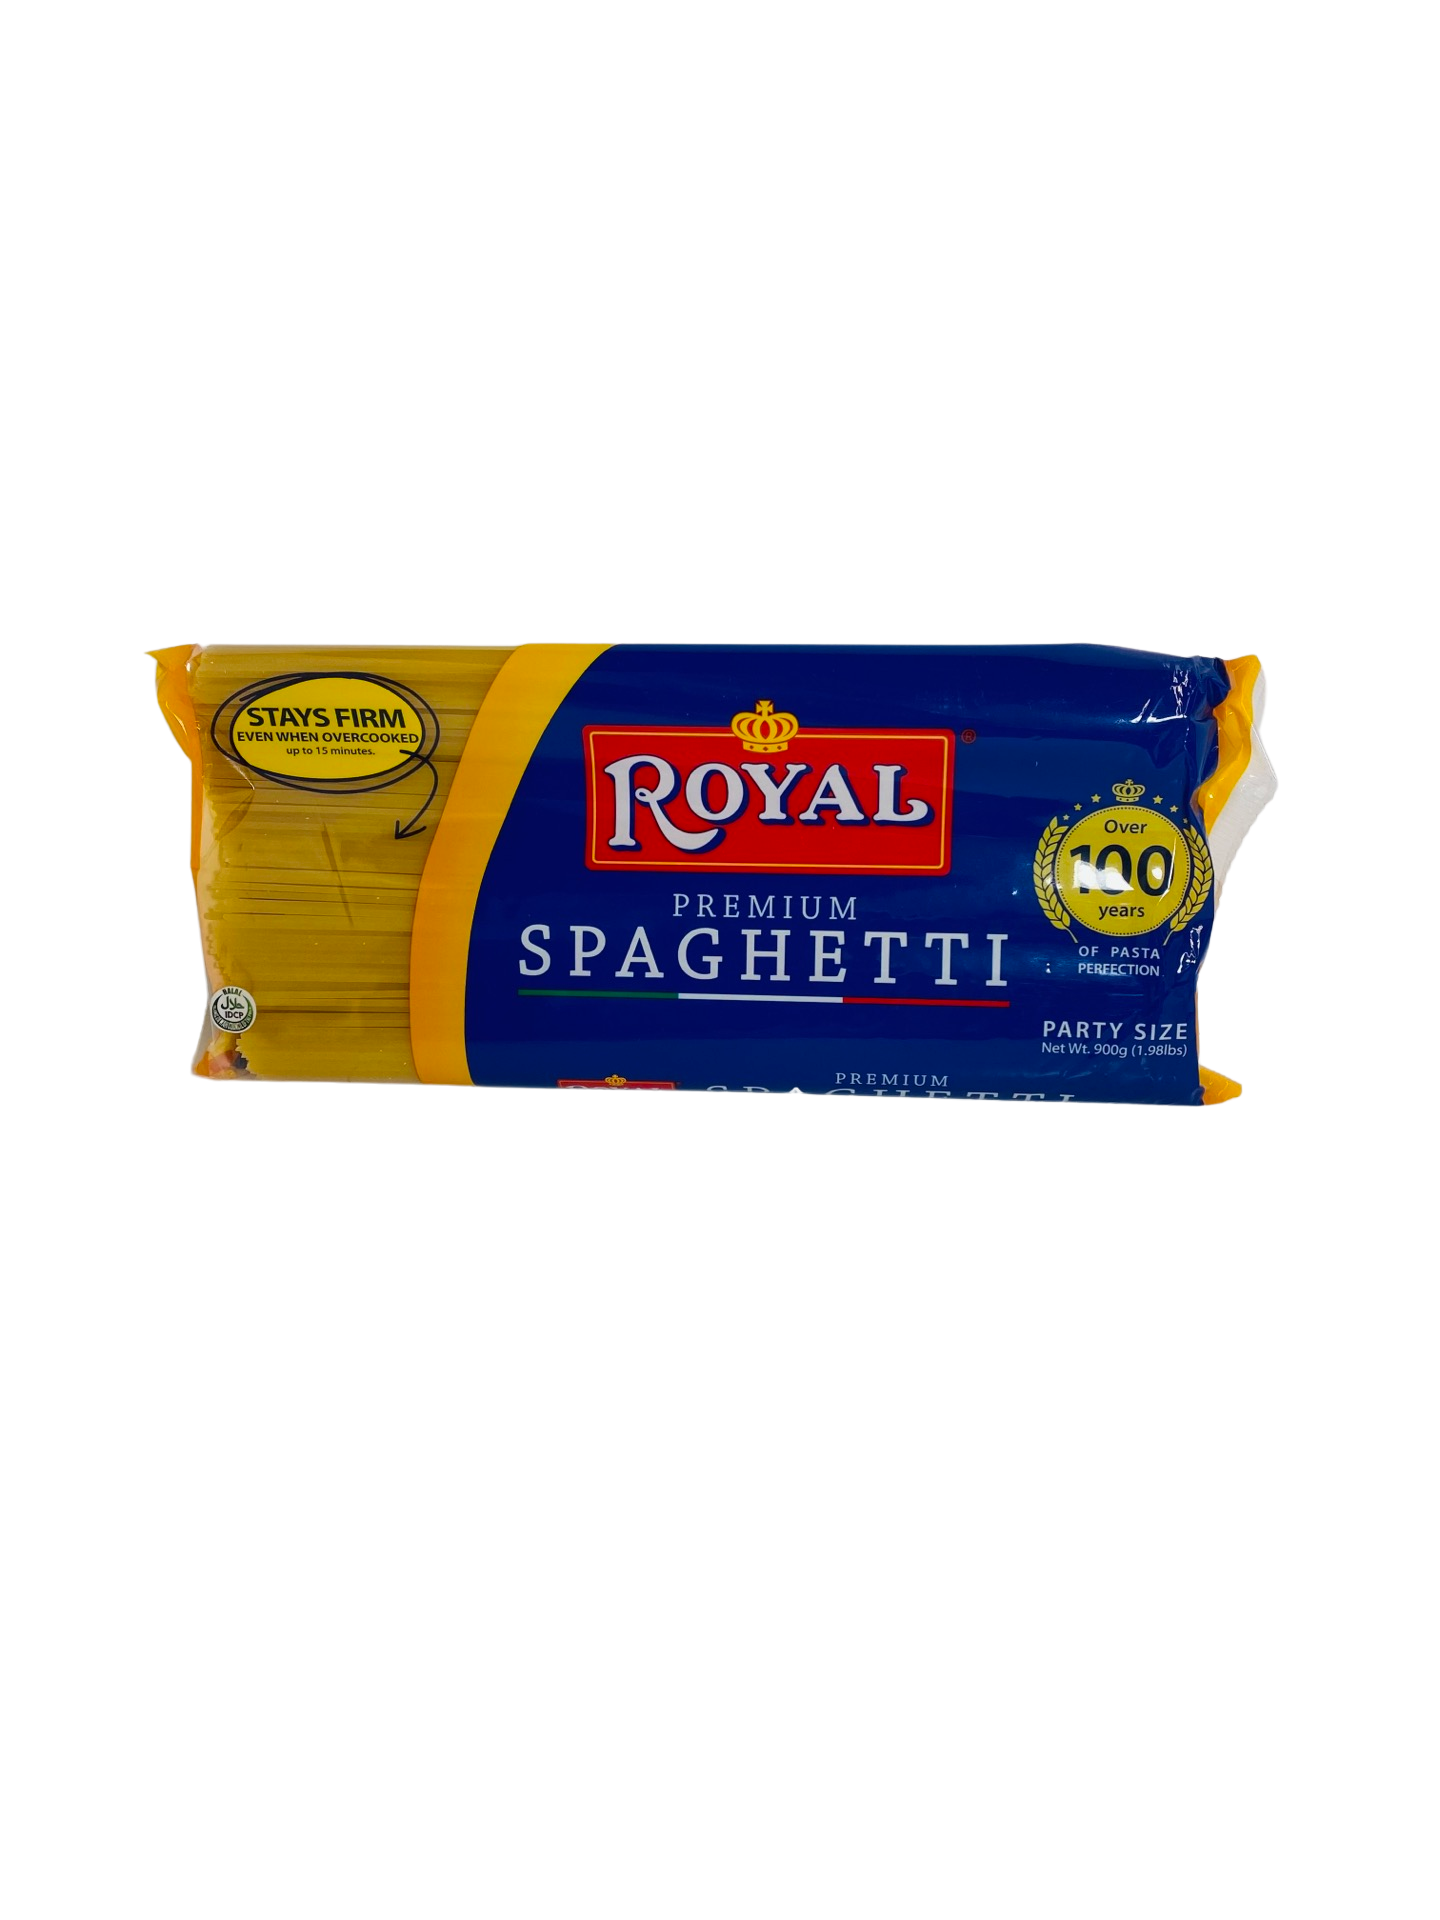 Royal Premium Spaghetti Party Size 900g